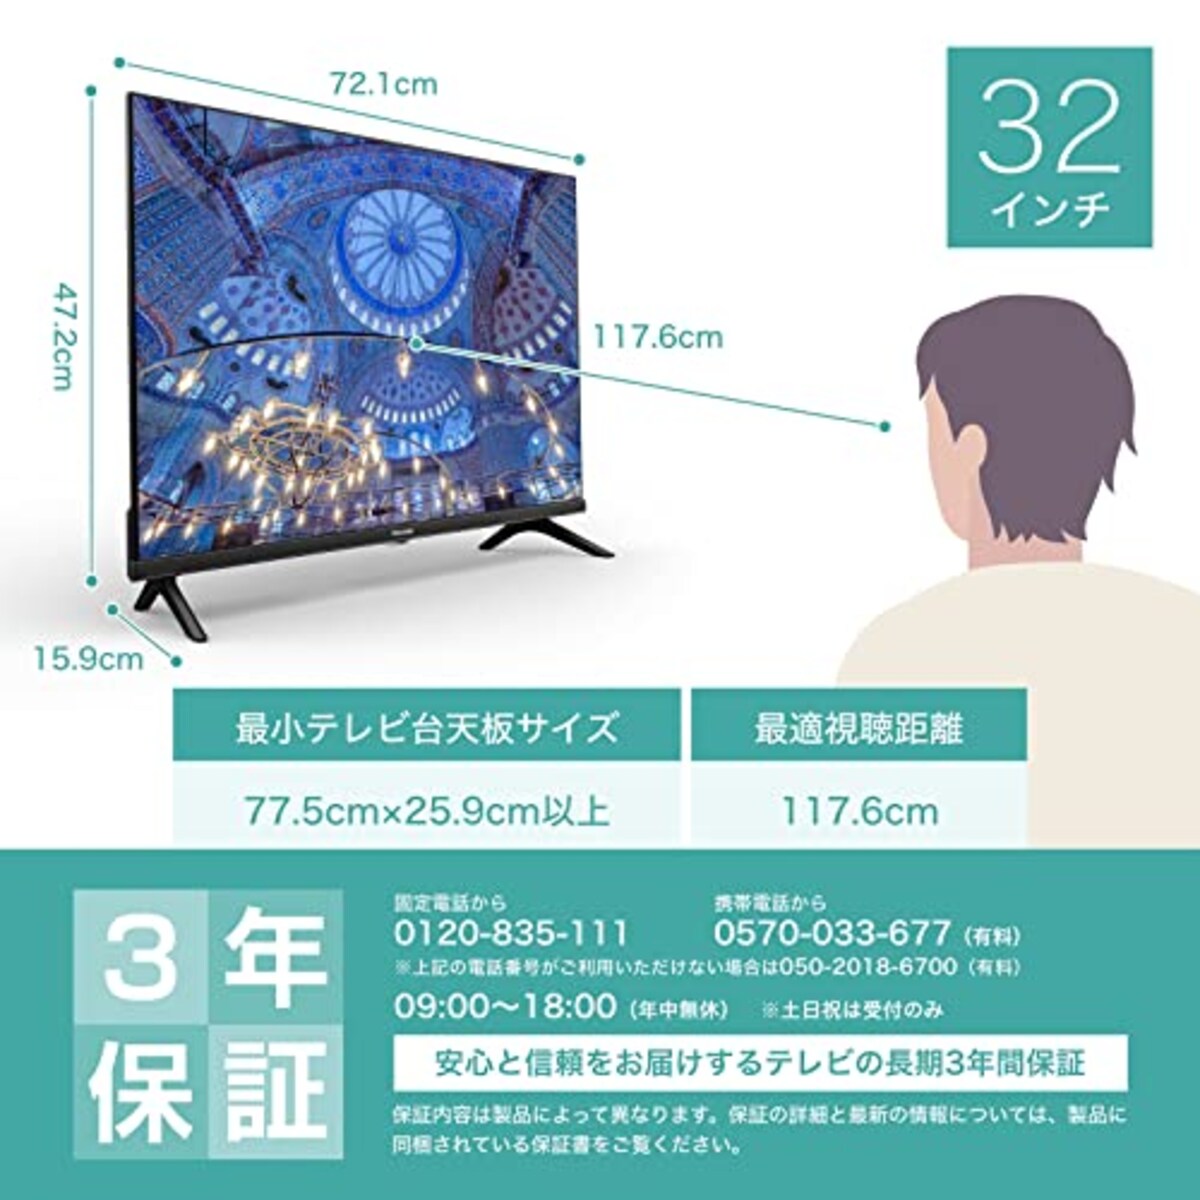  Hisense 32V型 ハイビジョン 液晶 テレビ 32A40H ネット動画対応 ADSパネル 3年保証 2022年モデル ブラック画像2 